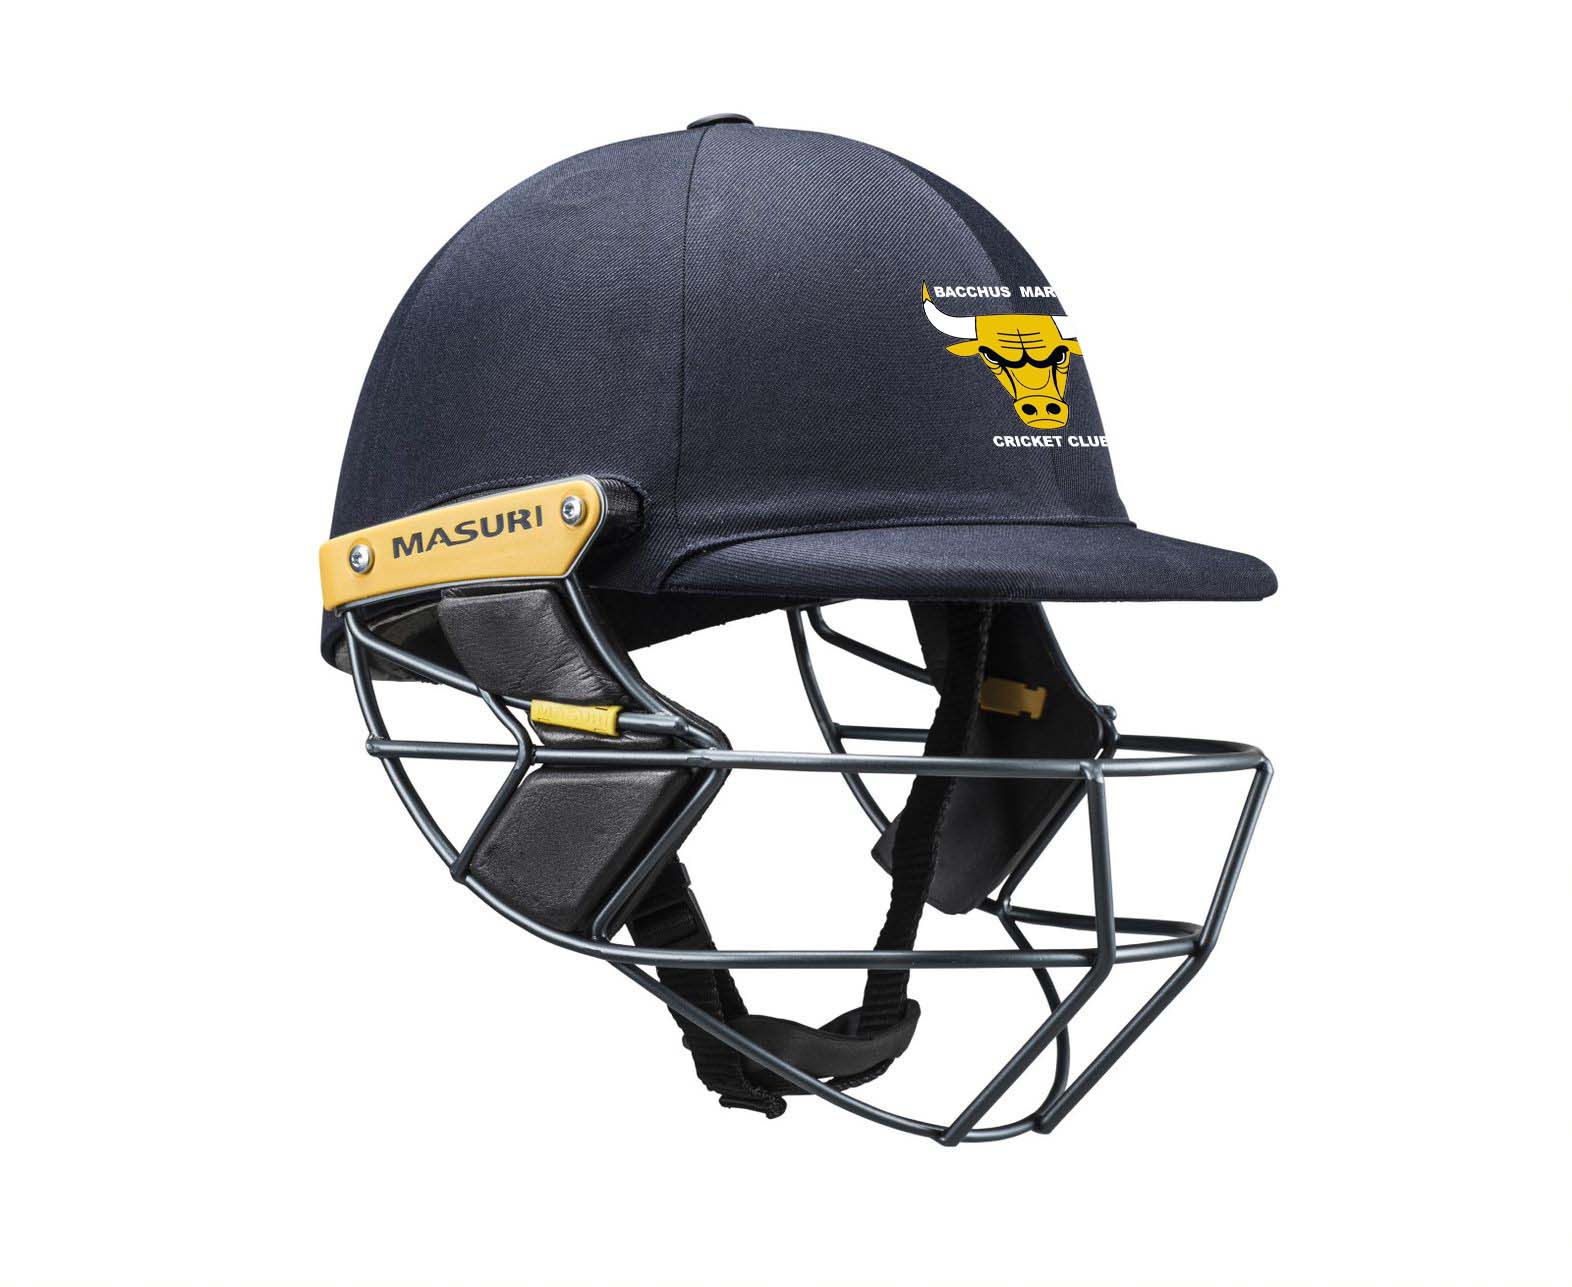 Masuri Club Helmet Bacchus Marsh Cricket Club Helmet